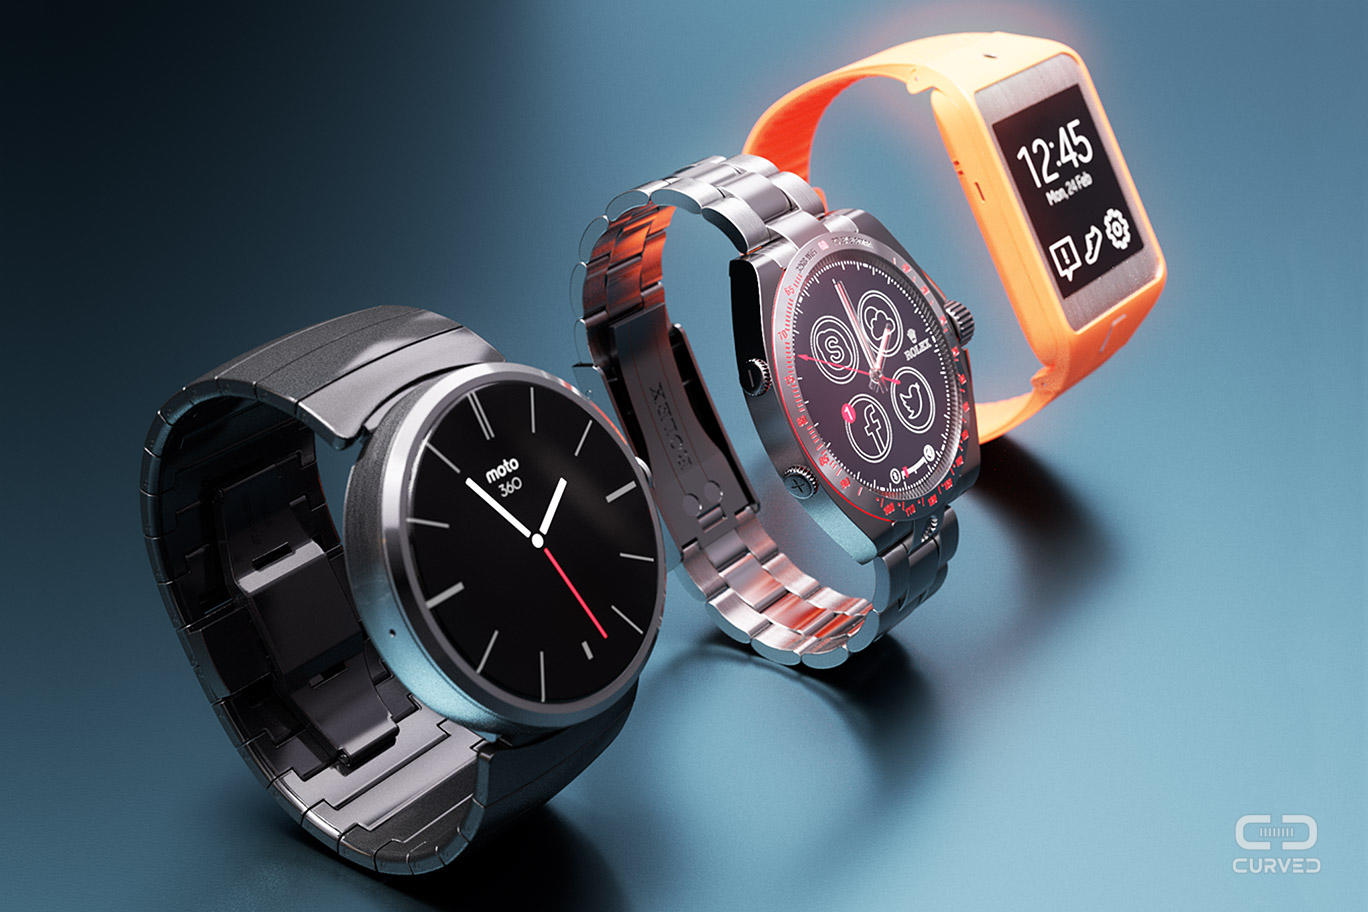 iwatch wallpaper,watch,analog watch,watch accessory,product,fashion accessory